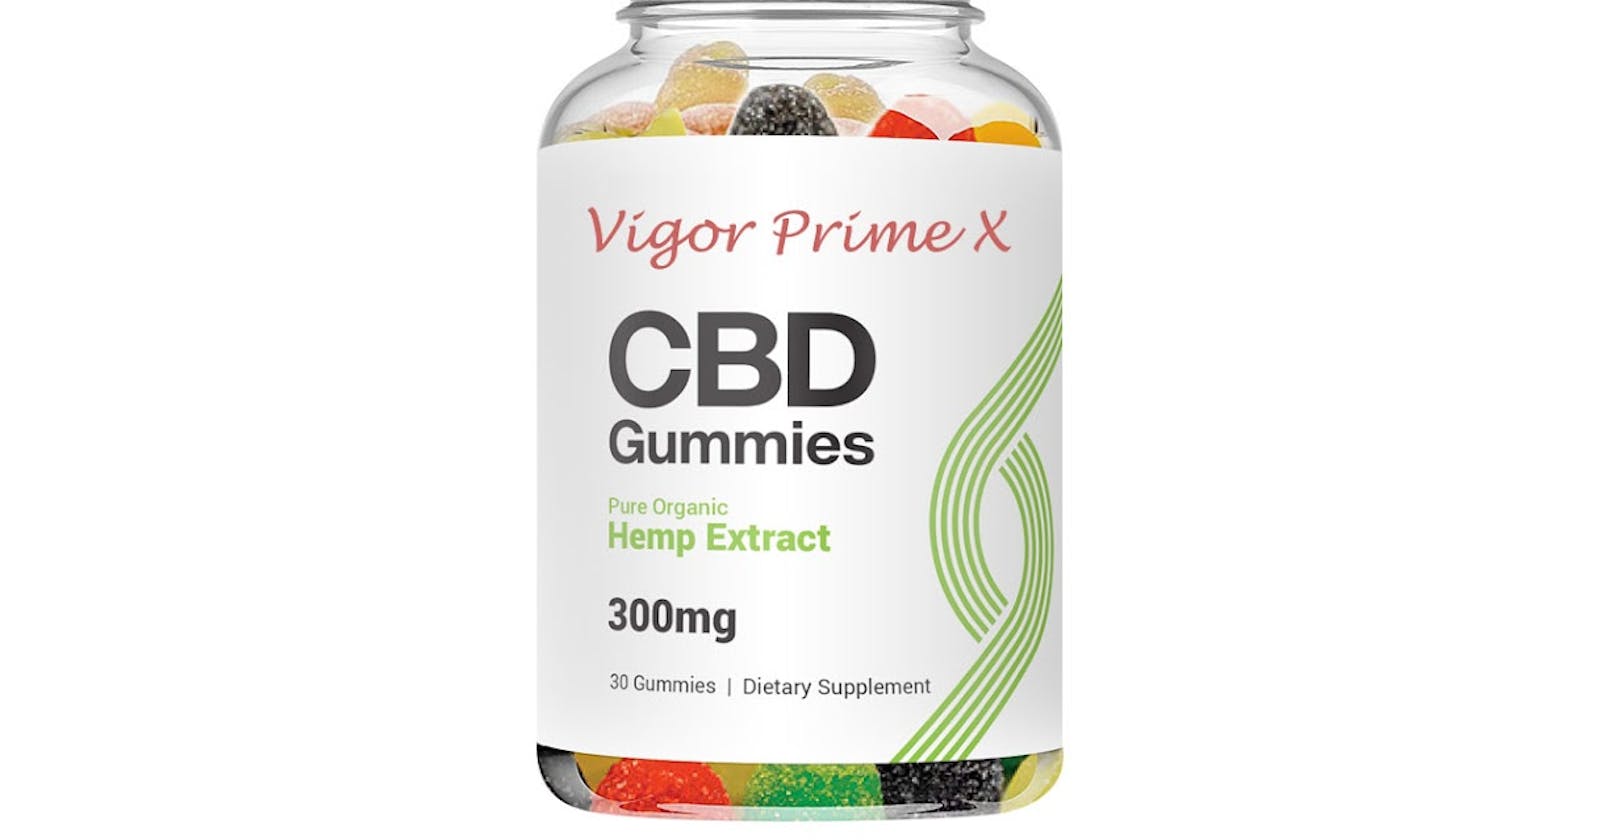 Potential Benefits of Vigor Prime X CBD Gummies